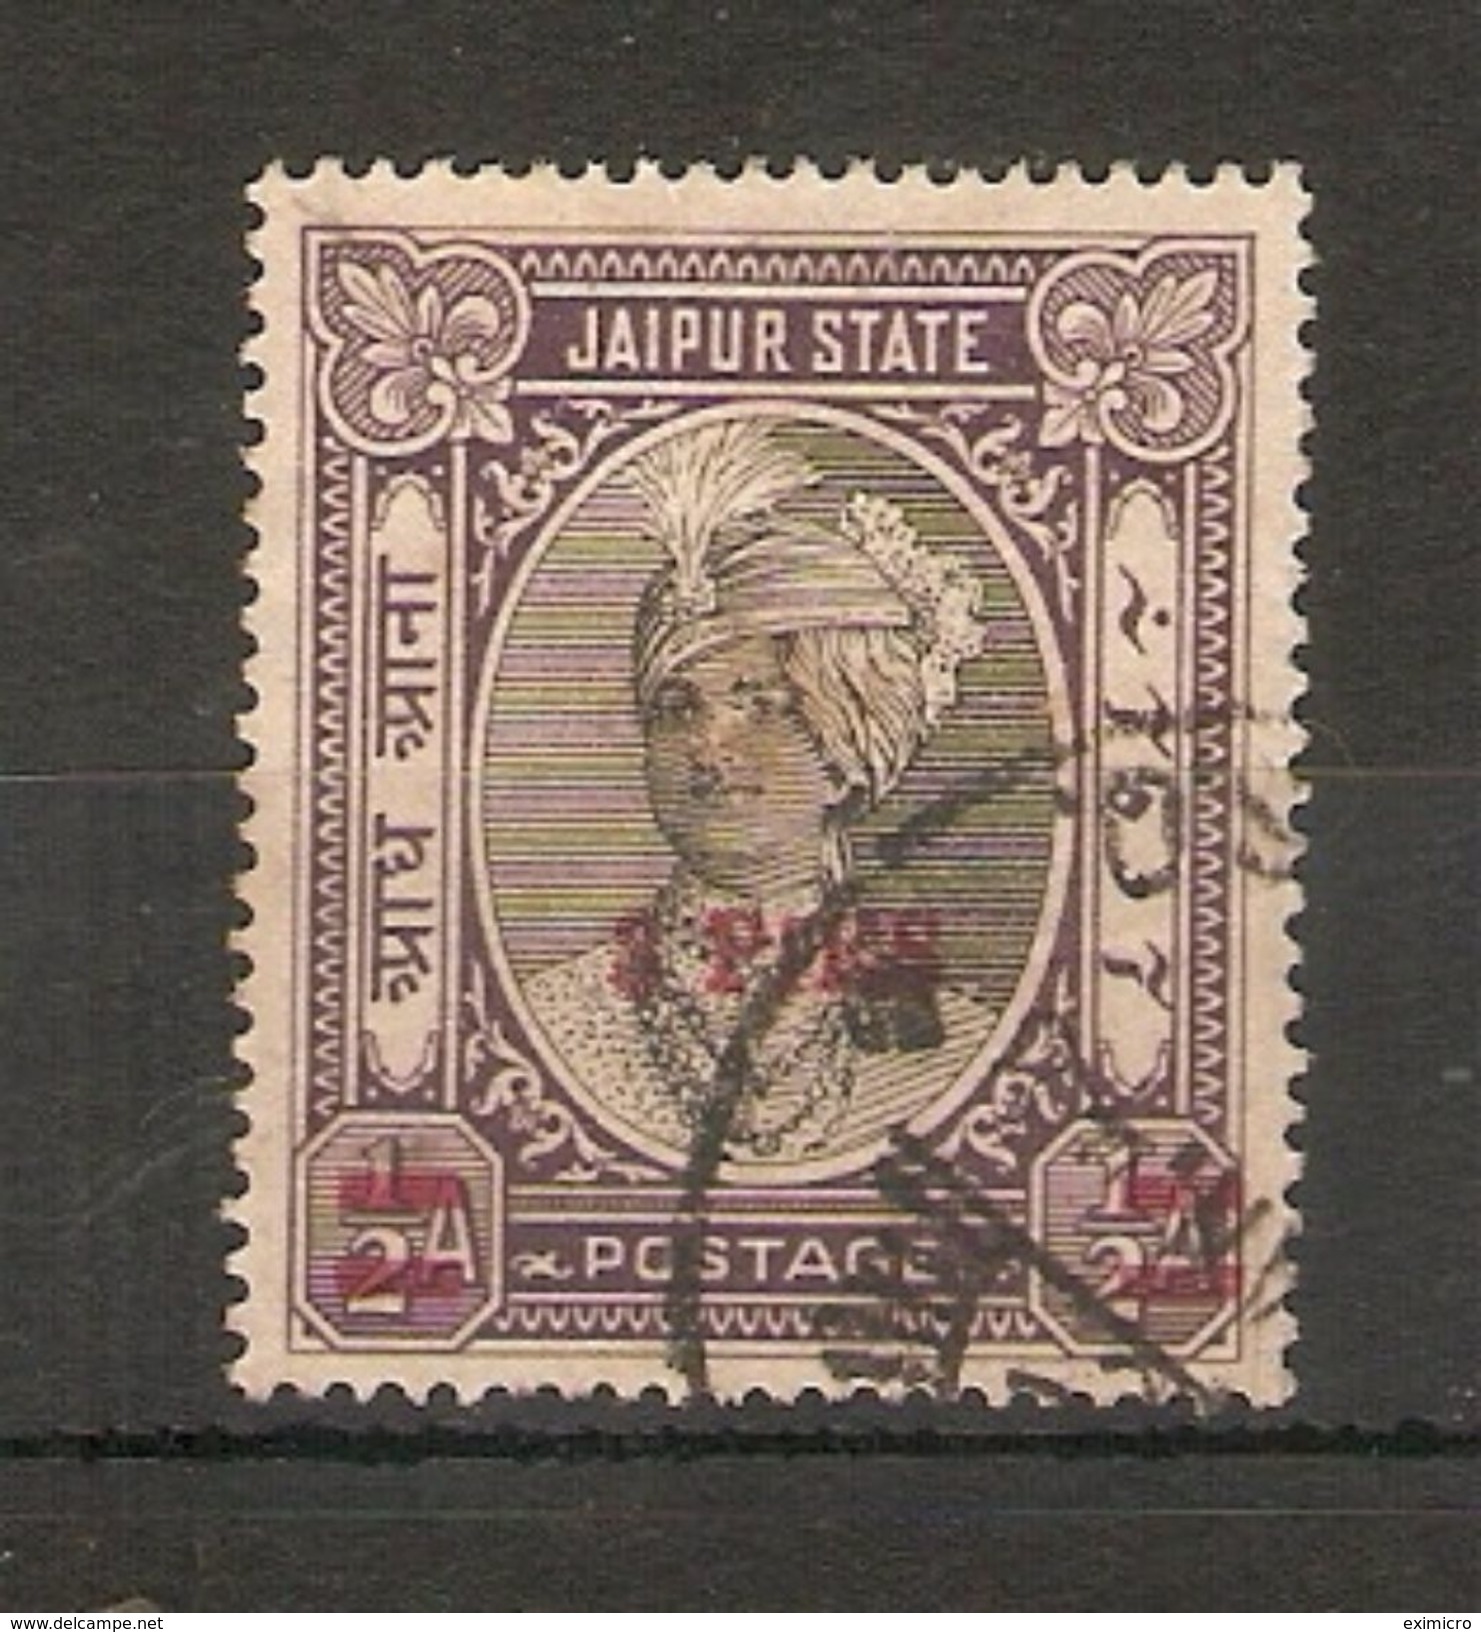 INDIA - JAIPUR 1947 3p On ½a SG 71 FINE USED Cat £38 - Jaipur